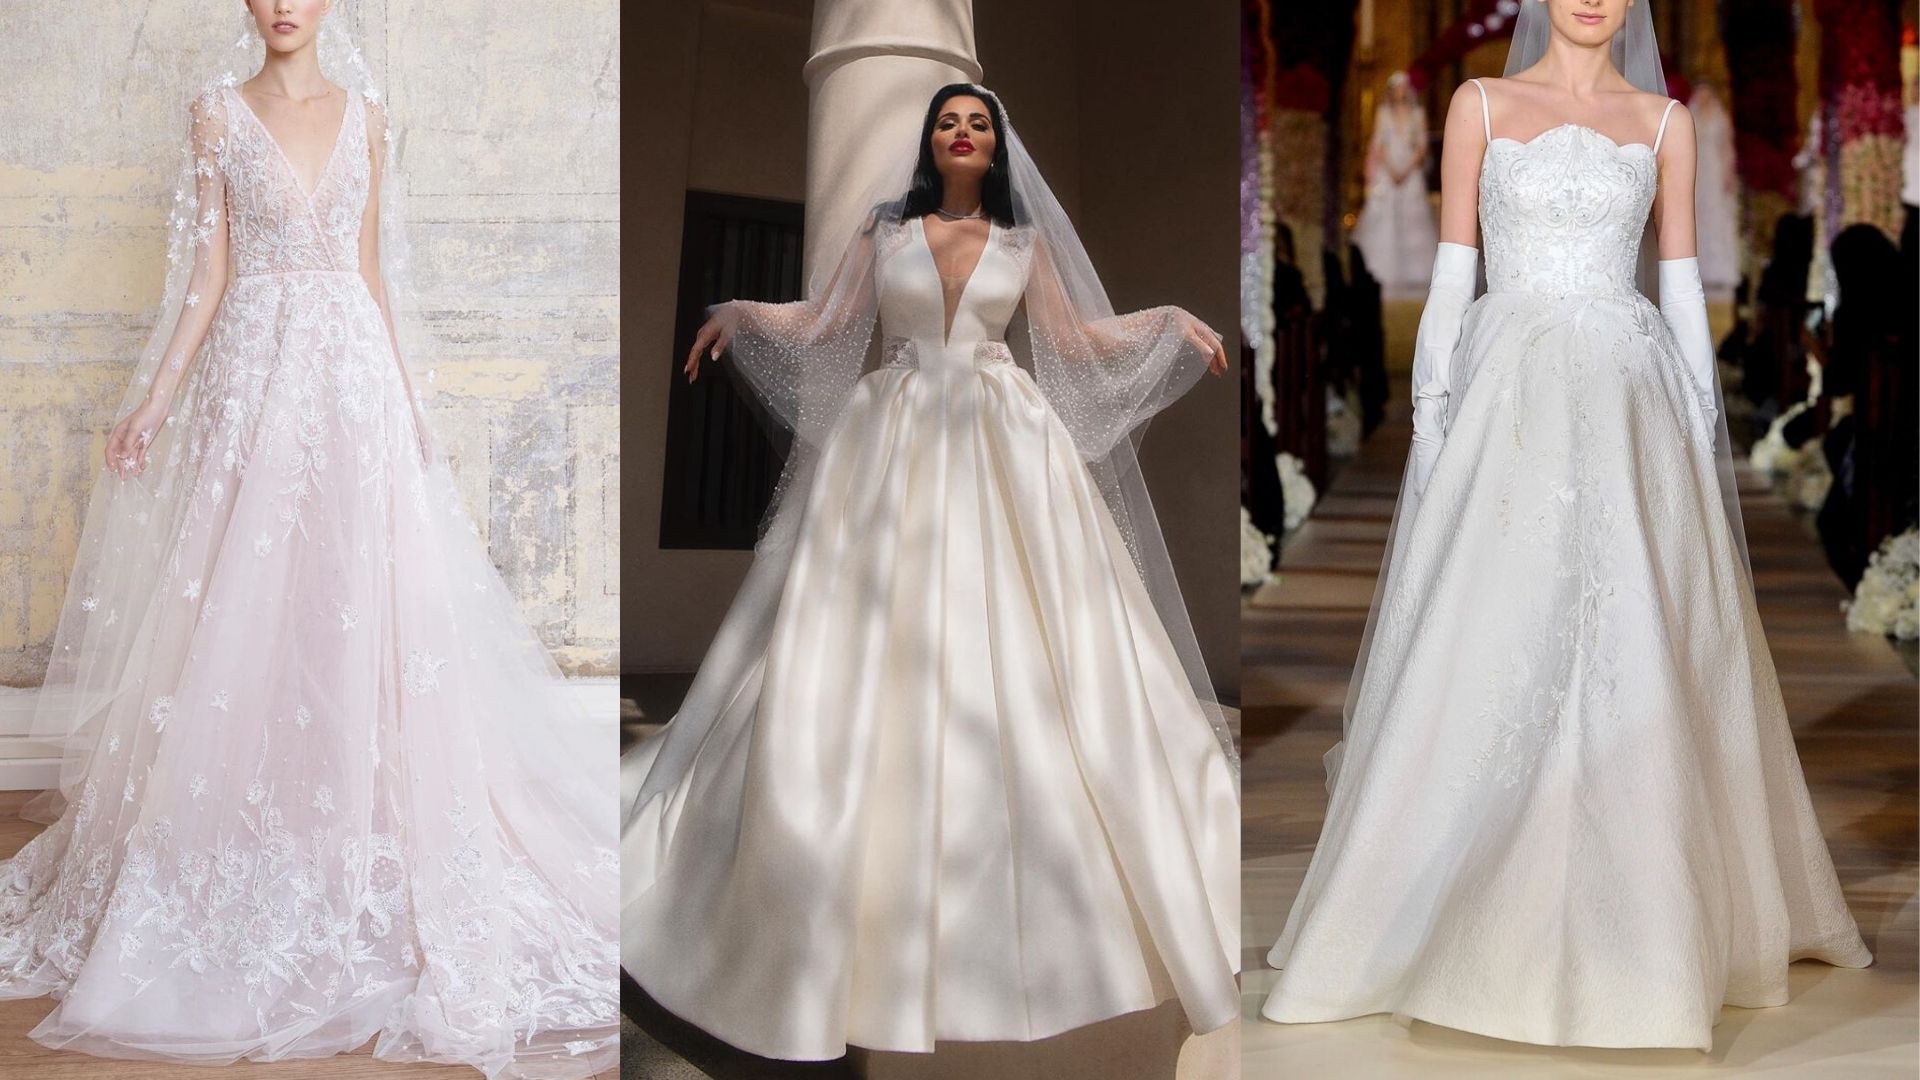 Victoria Swarovski Weds In A Michael Cinco Gown | Harper's Bazaar Arabia